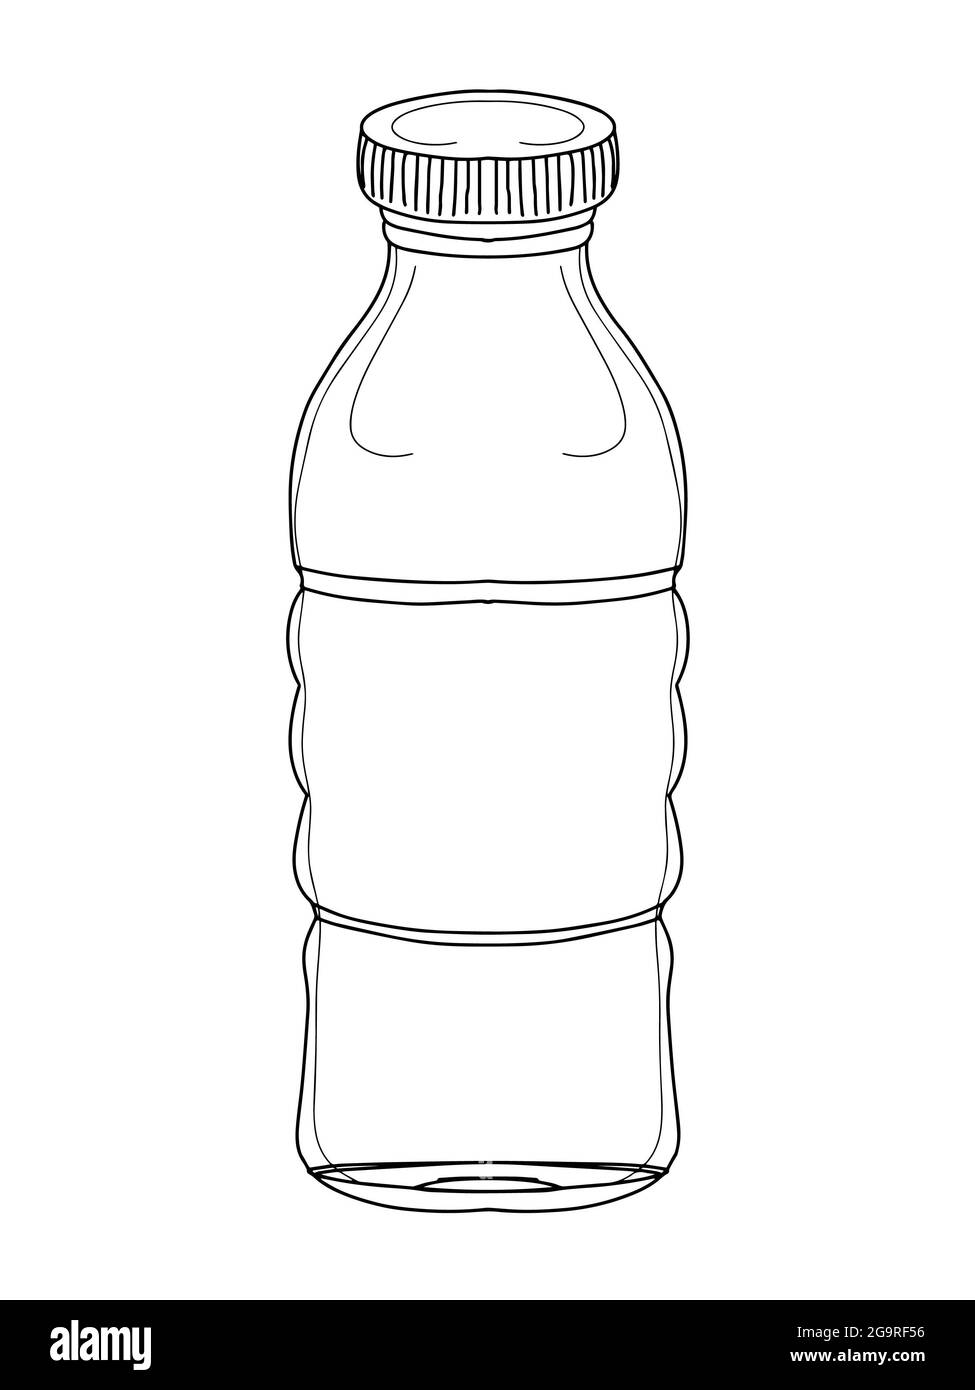 water bottles, illustration line drawing. Stock Photo